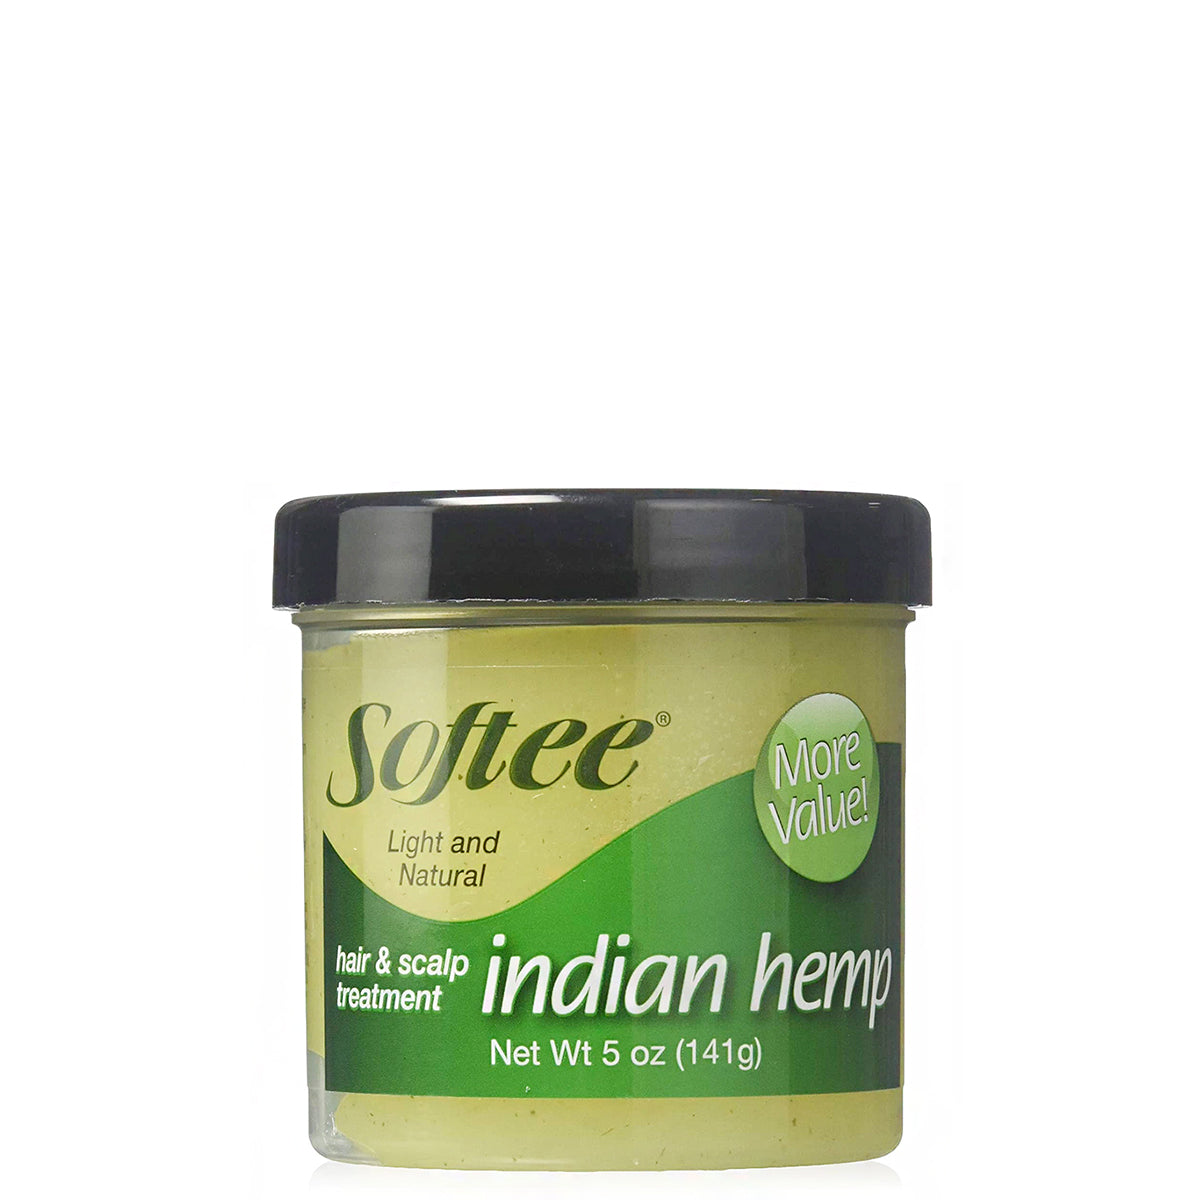 Softee Indian Hemp Hair & Scalp Treatment 5oz